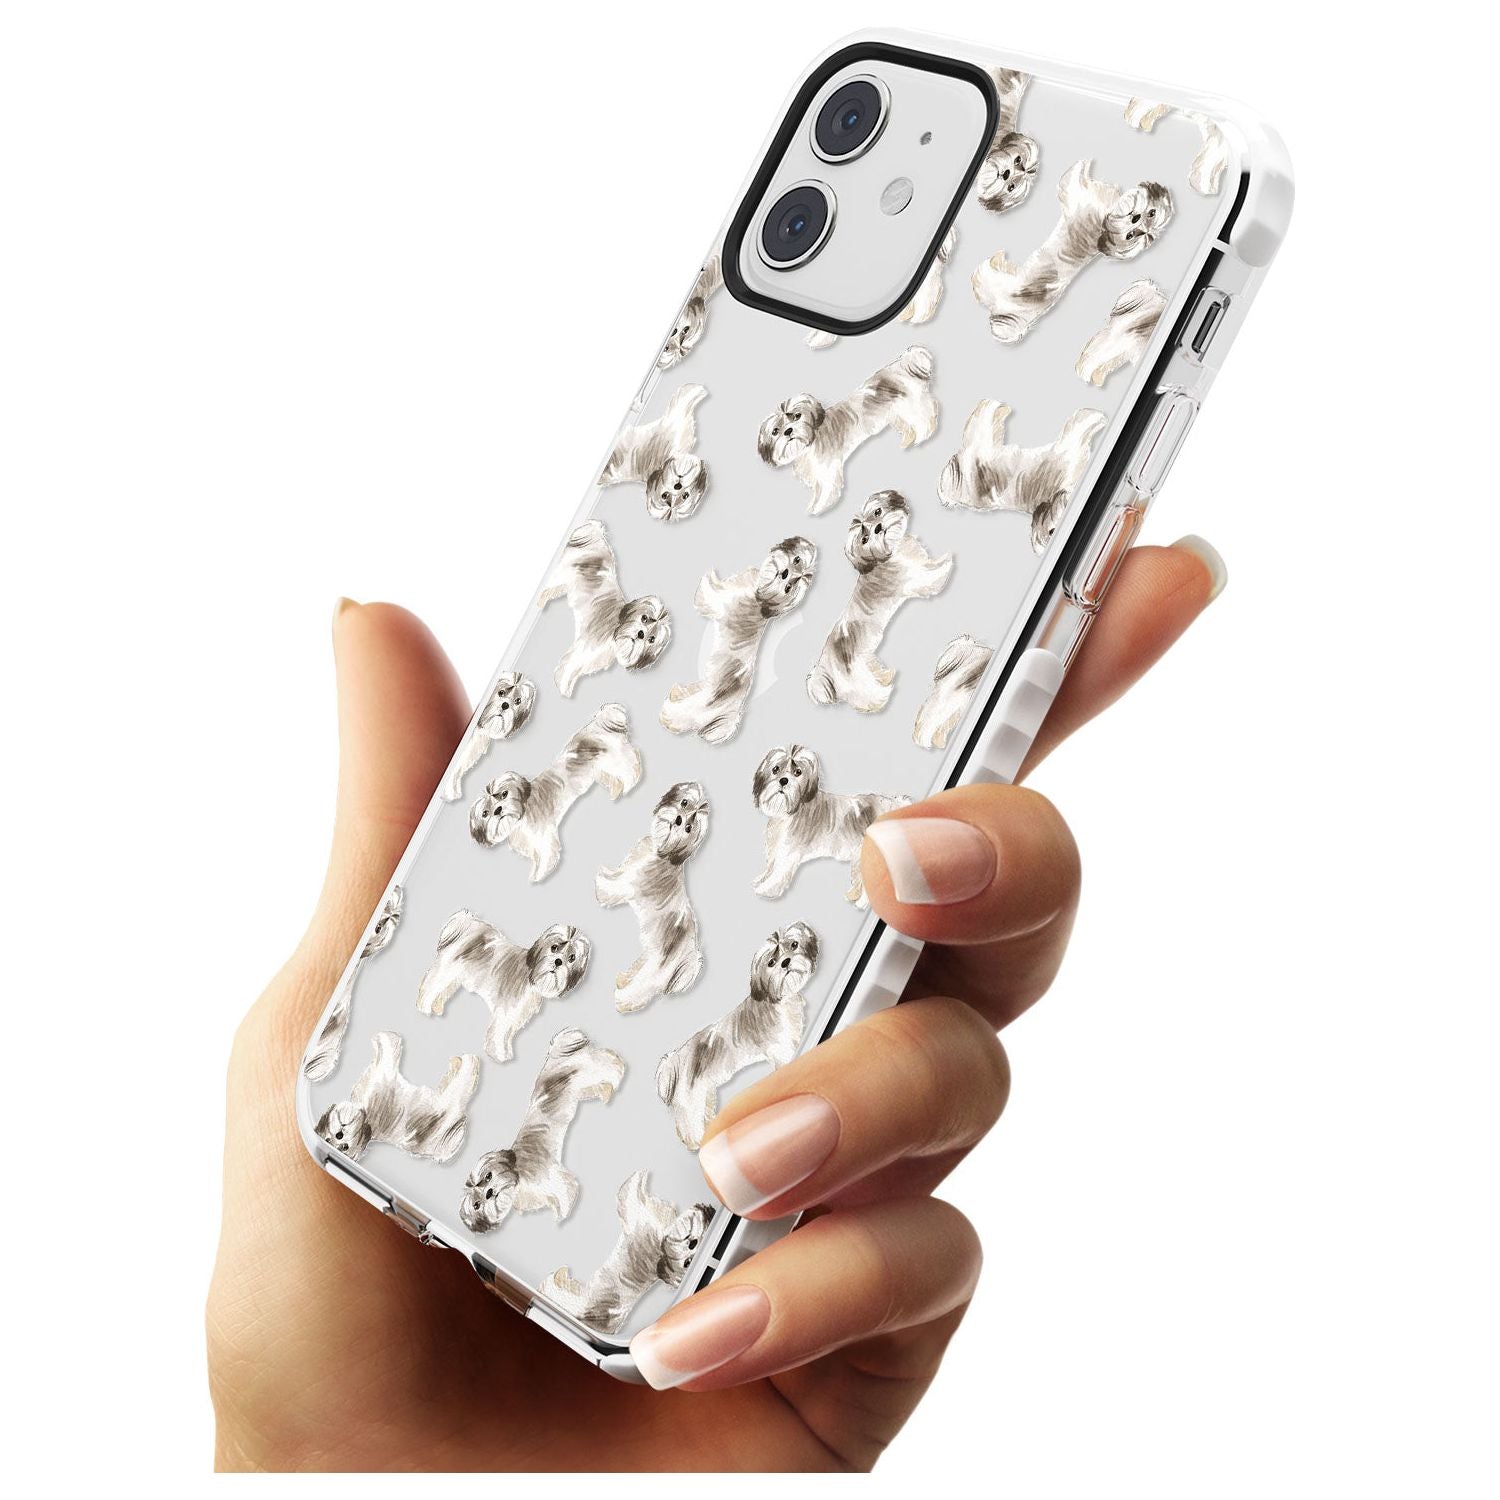 Shih tzu (Short Hair) Watercolour Dog Pattern Impact Phone Case for iPhone 11